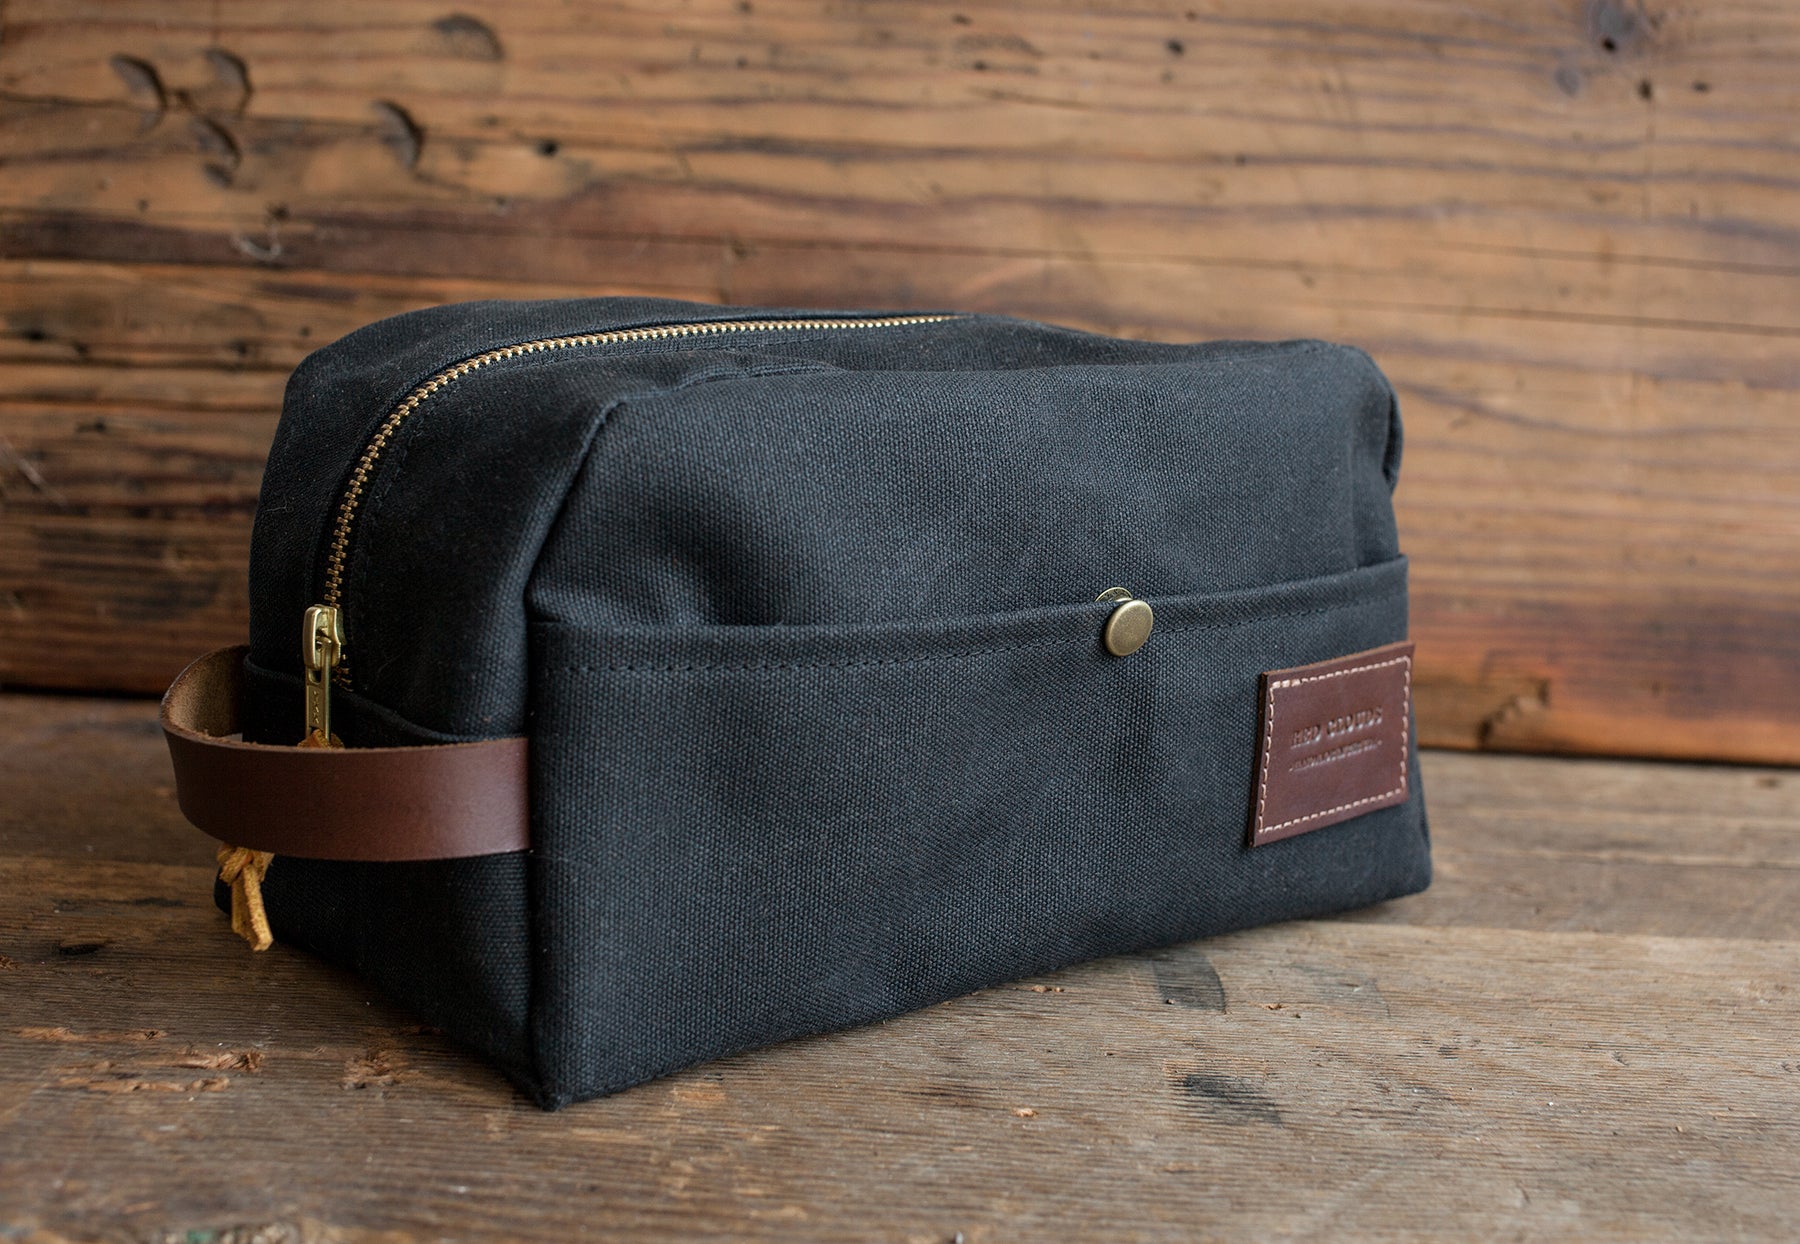 Blanket + Leather Carrier Gift Bundle. Handwoven, Handcrafted. – Trek Light